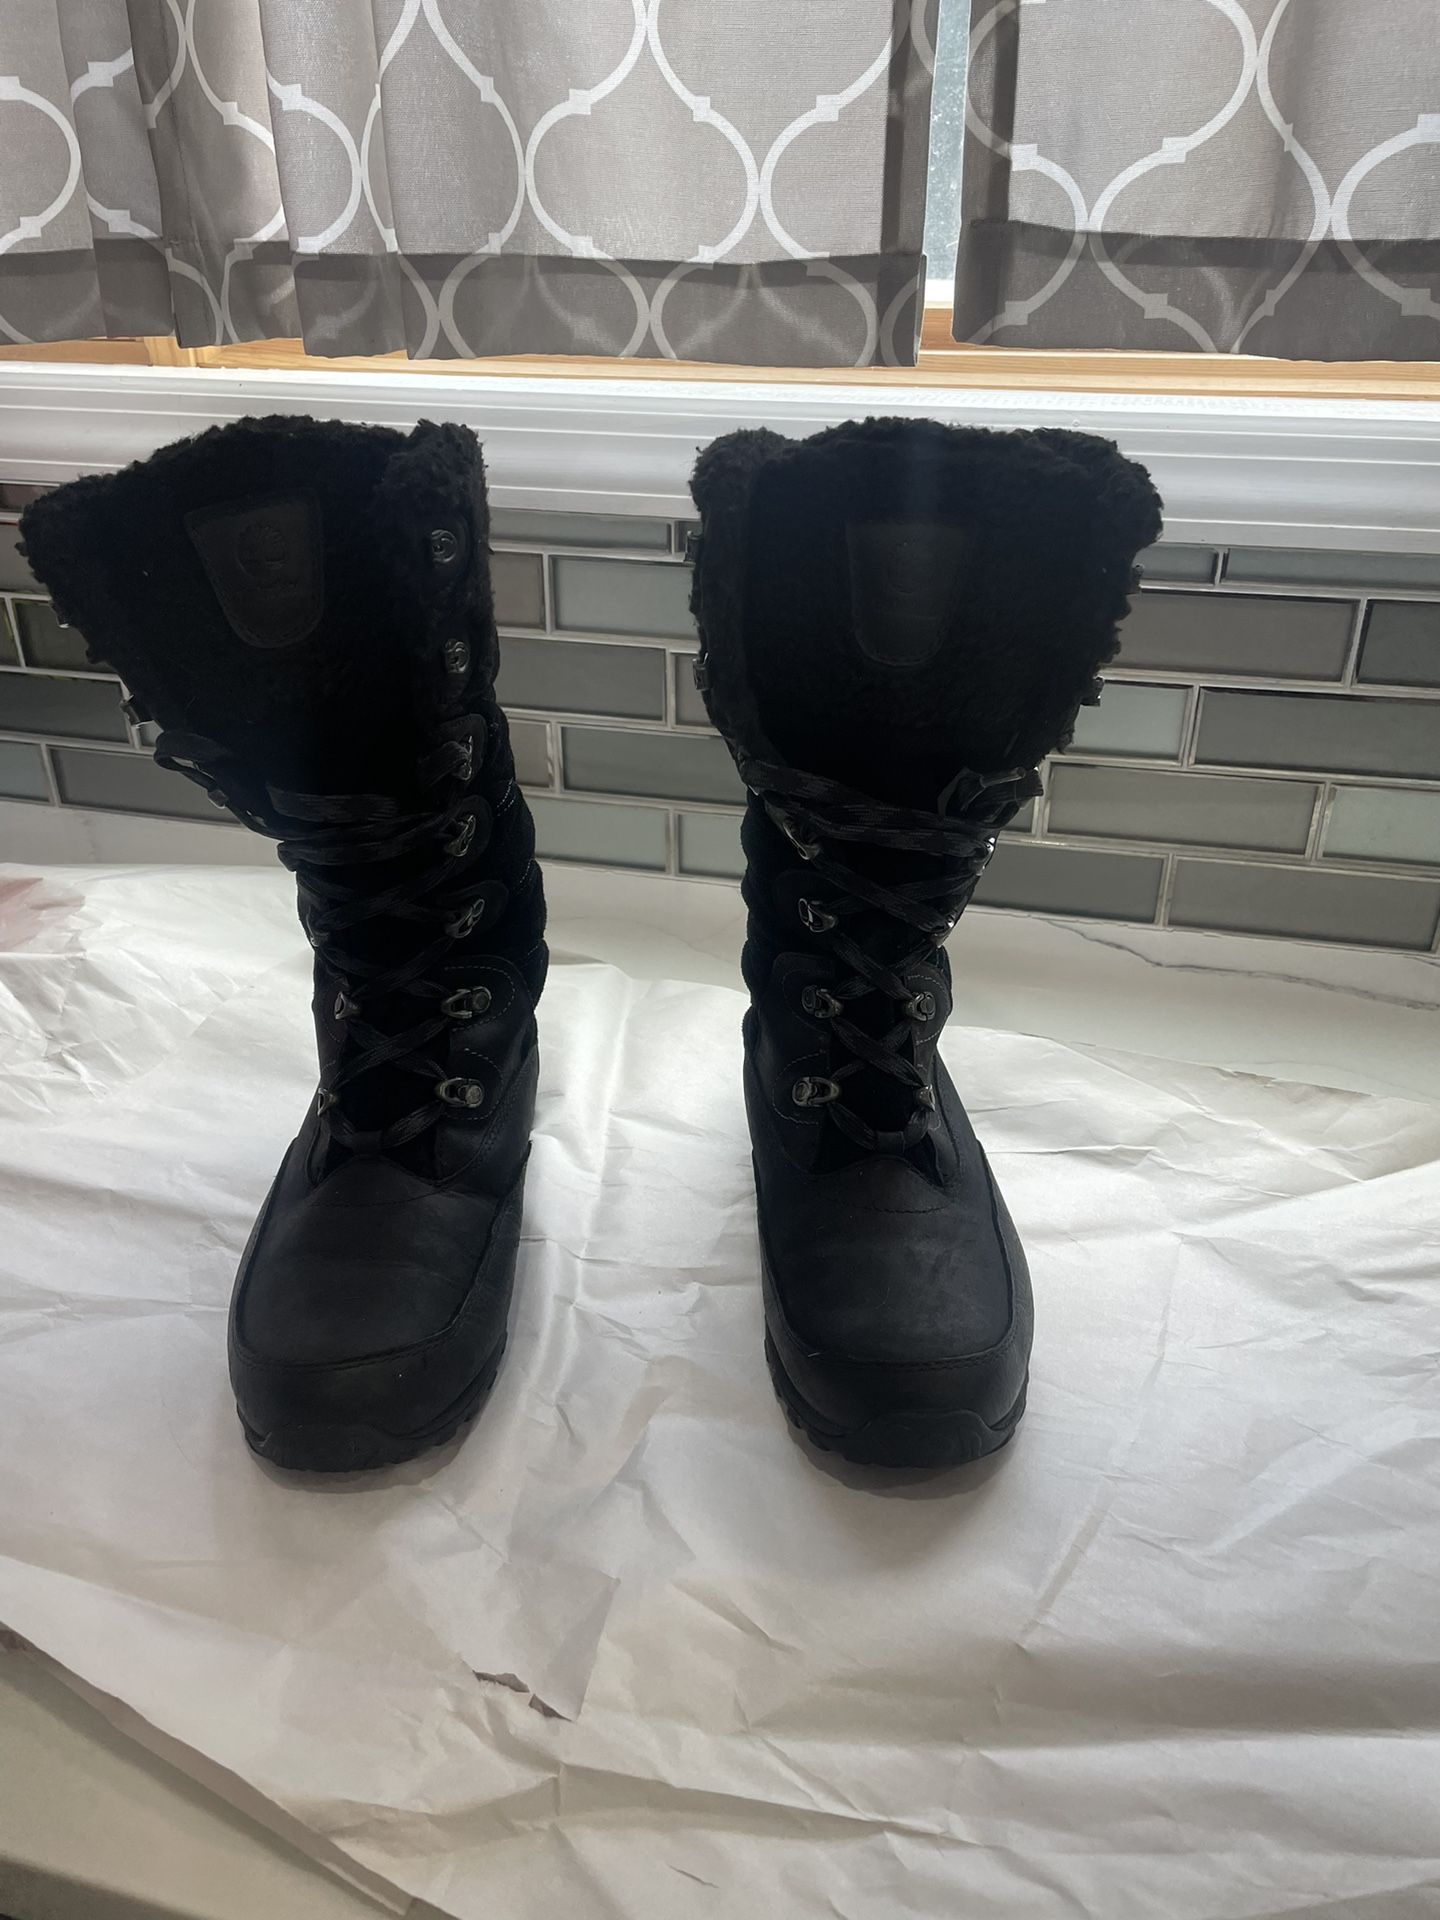 Timberland Women's Waterproof Snow Boots